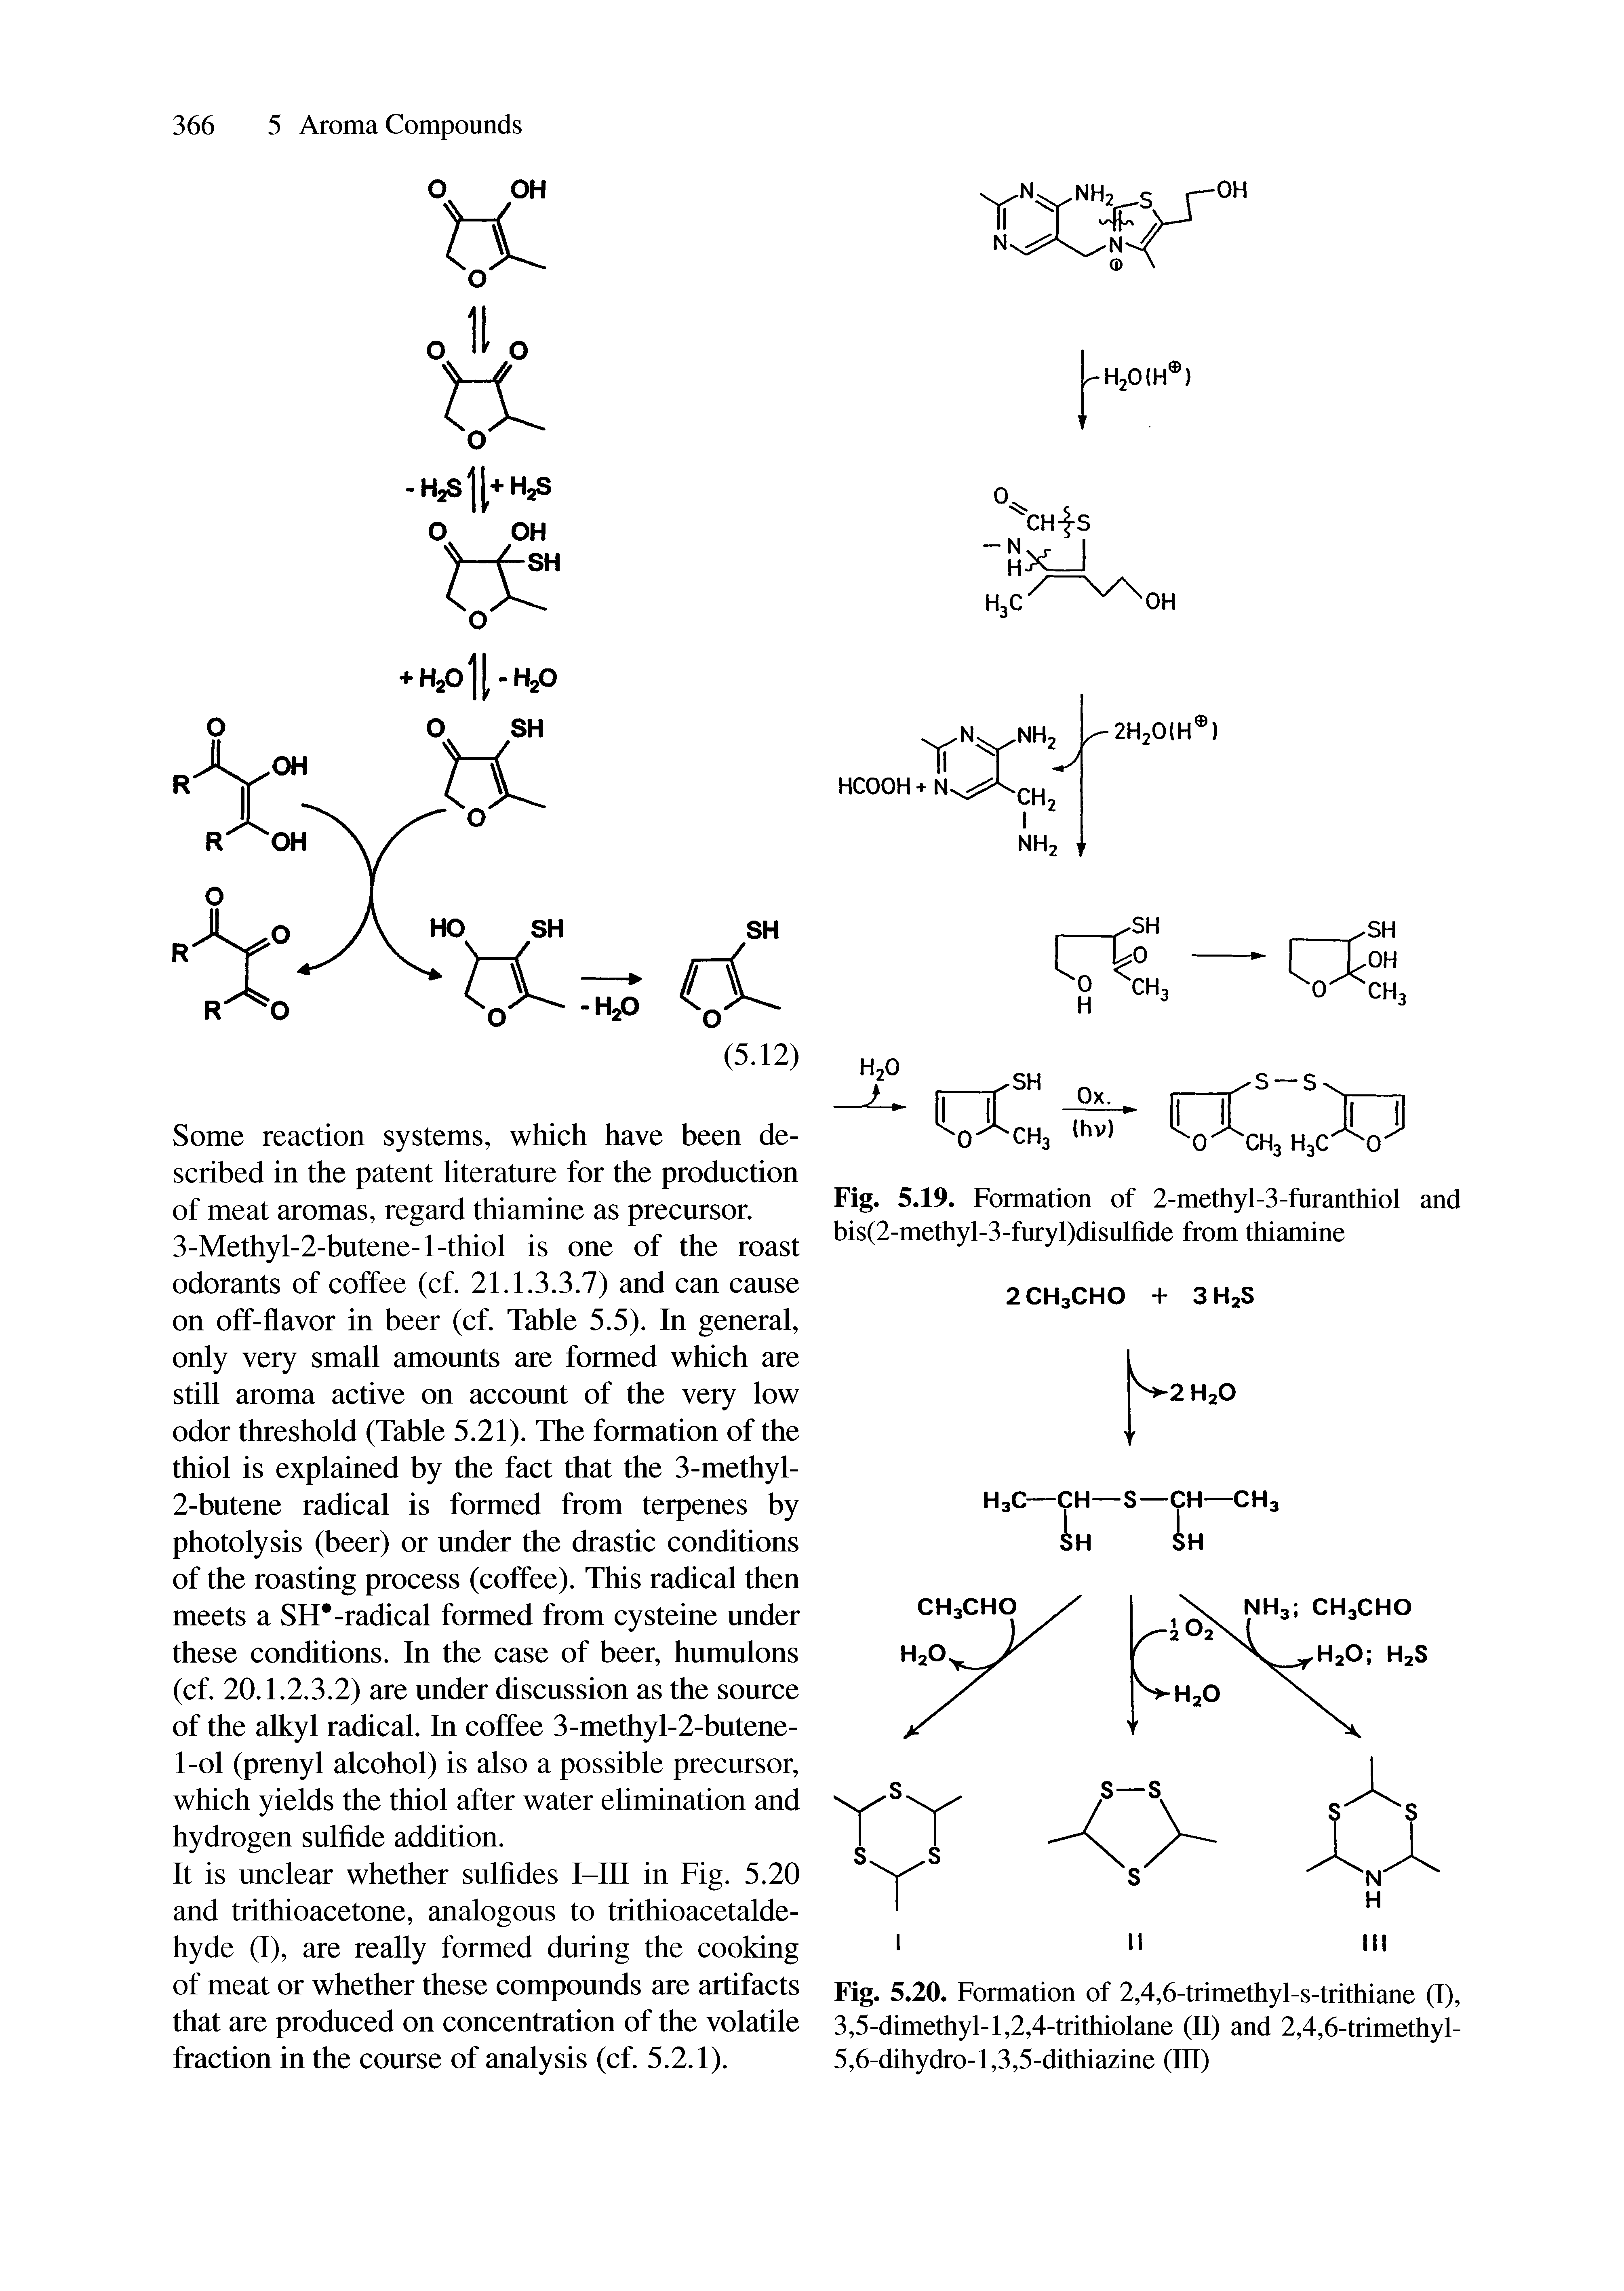 Fig. 5.19. Formation of 2-methyl-3-furanthiol and bis(2-methyl-3-furyl)disulfide from thiamine...